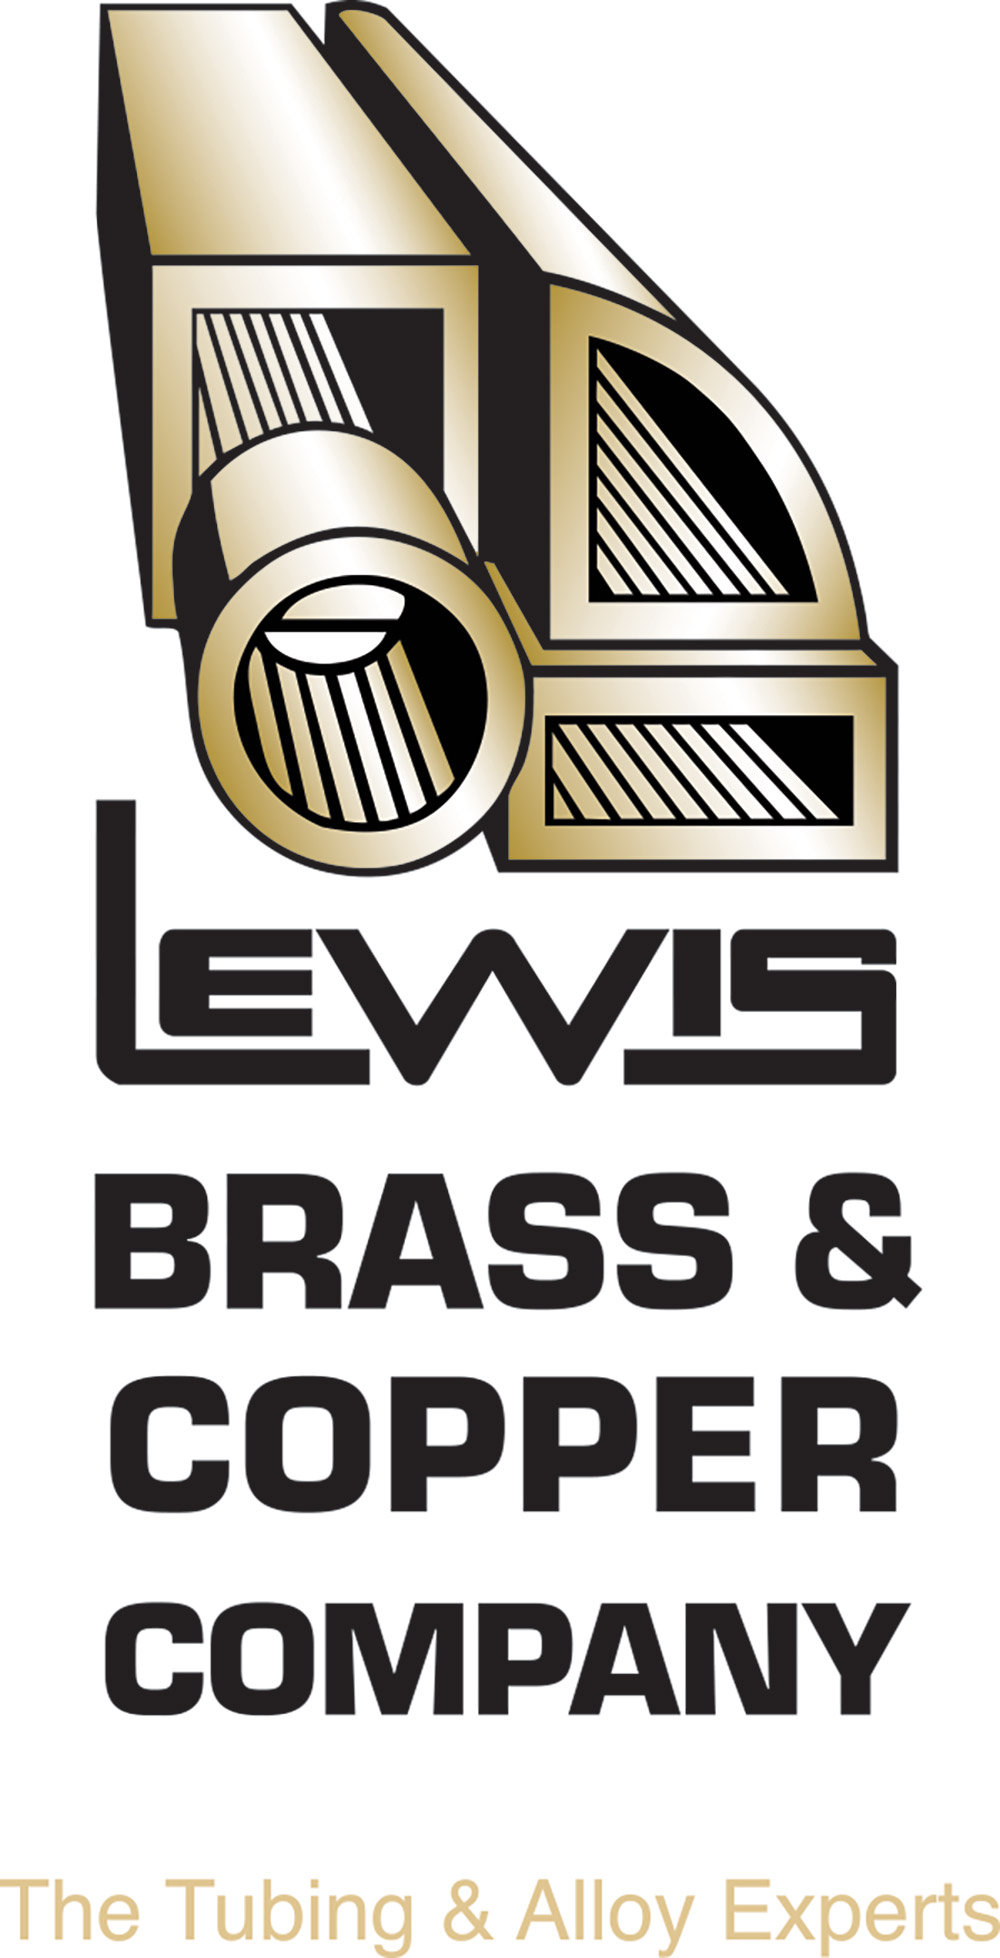 Lewis Brass & Copper Co. logo